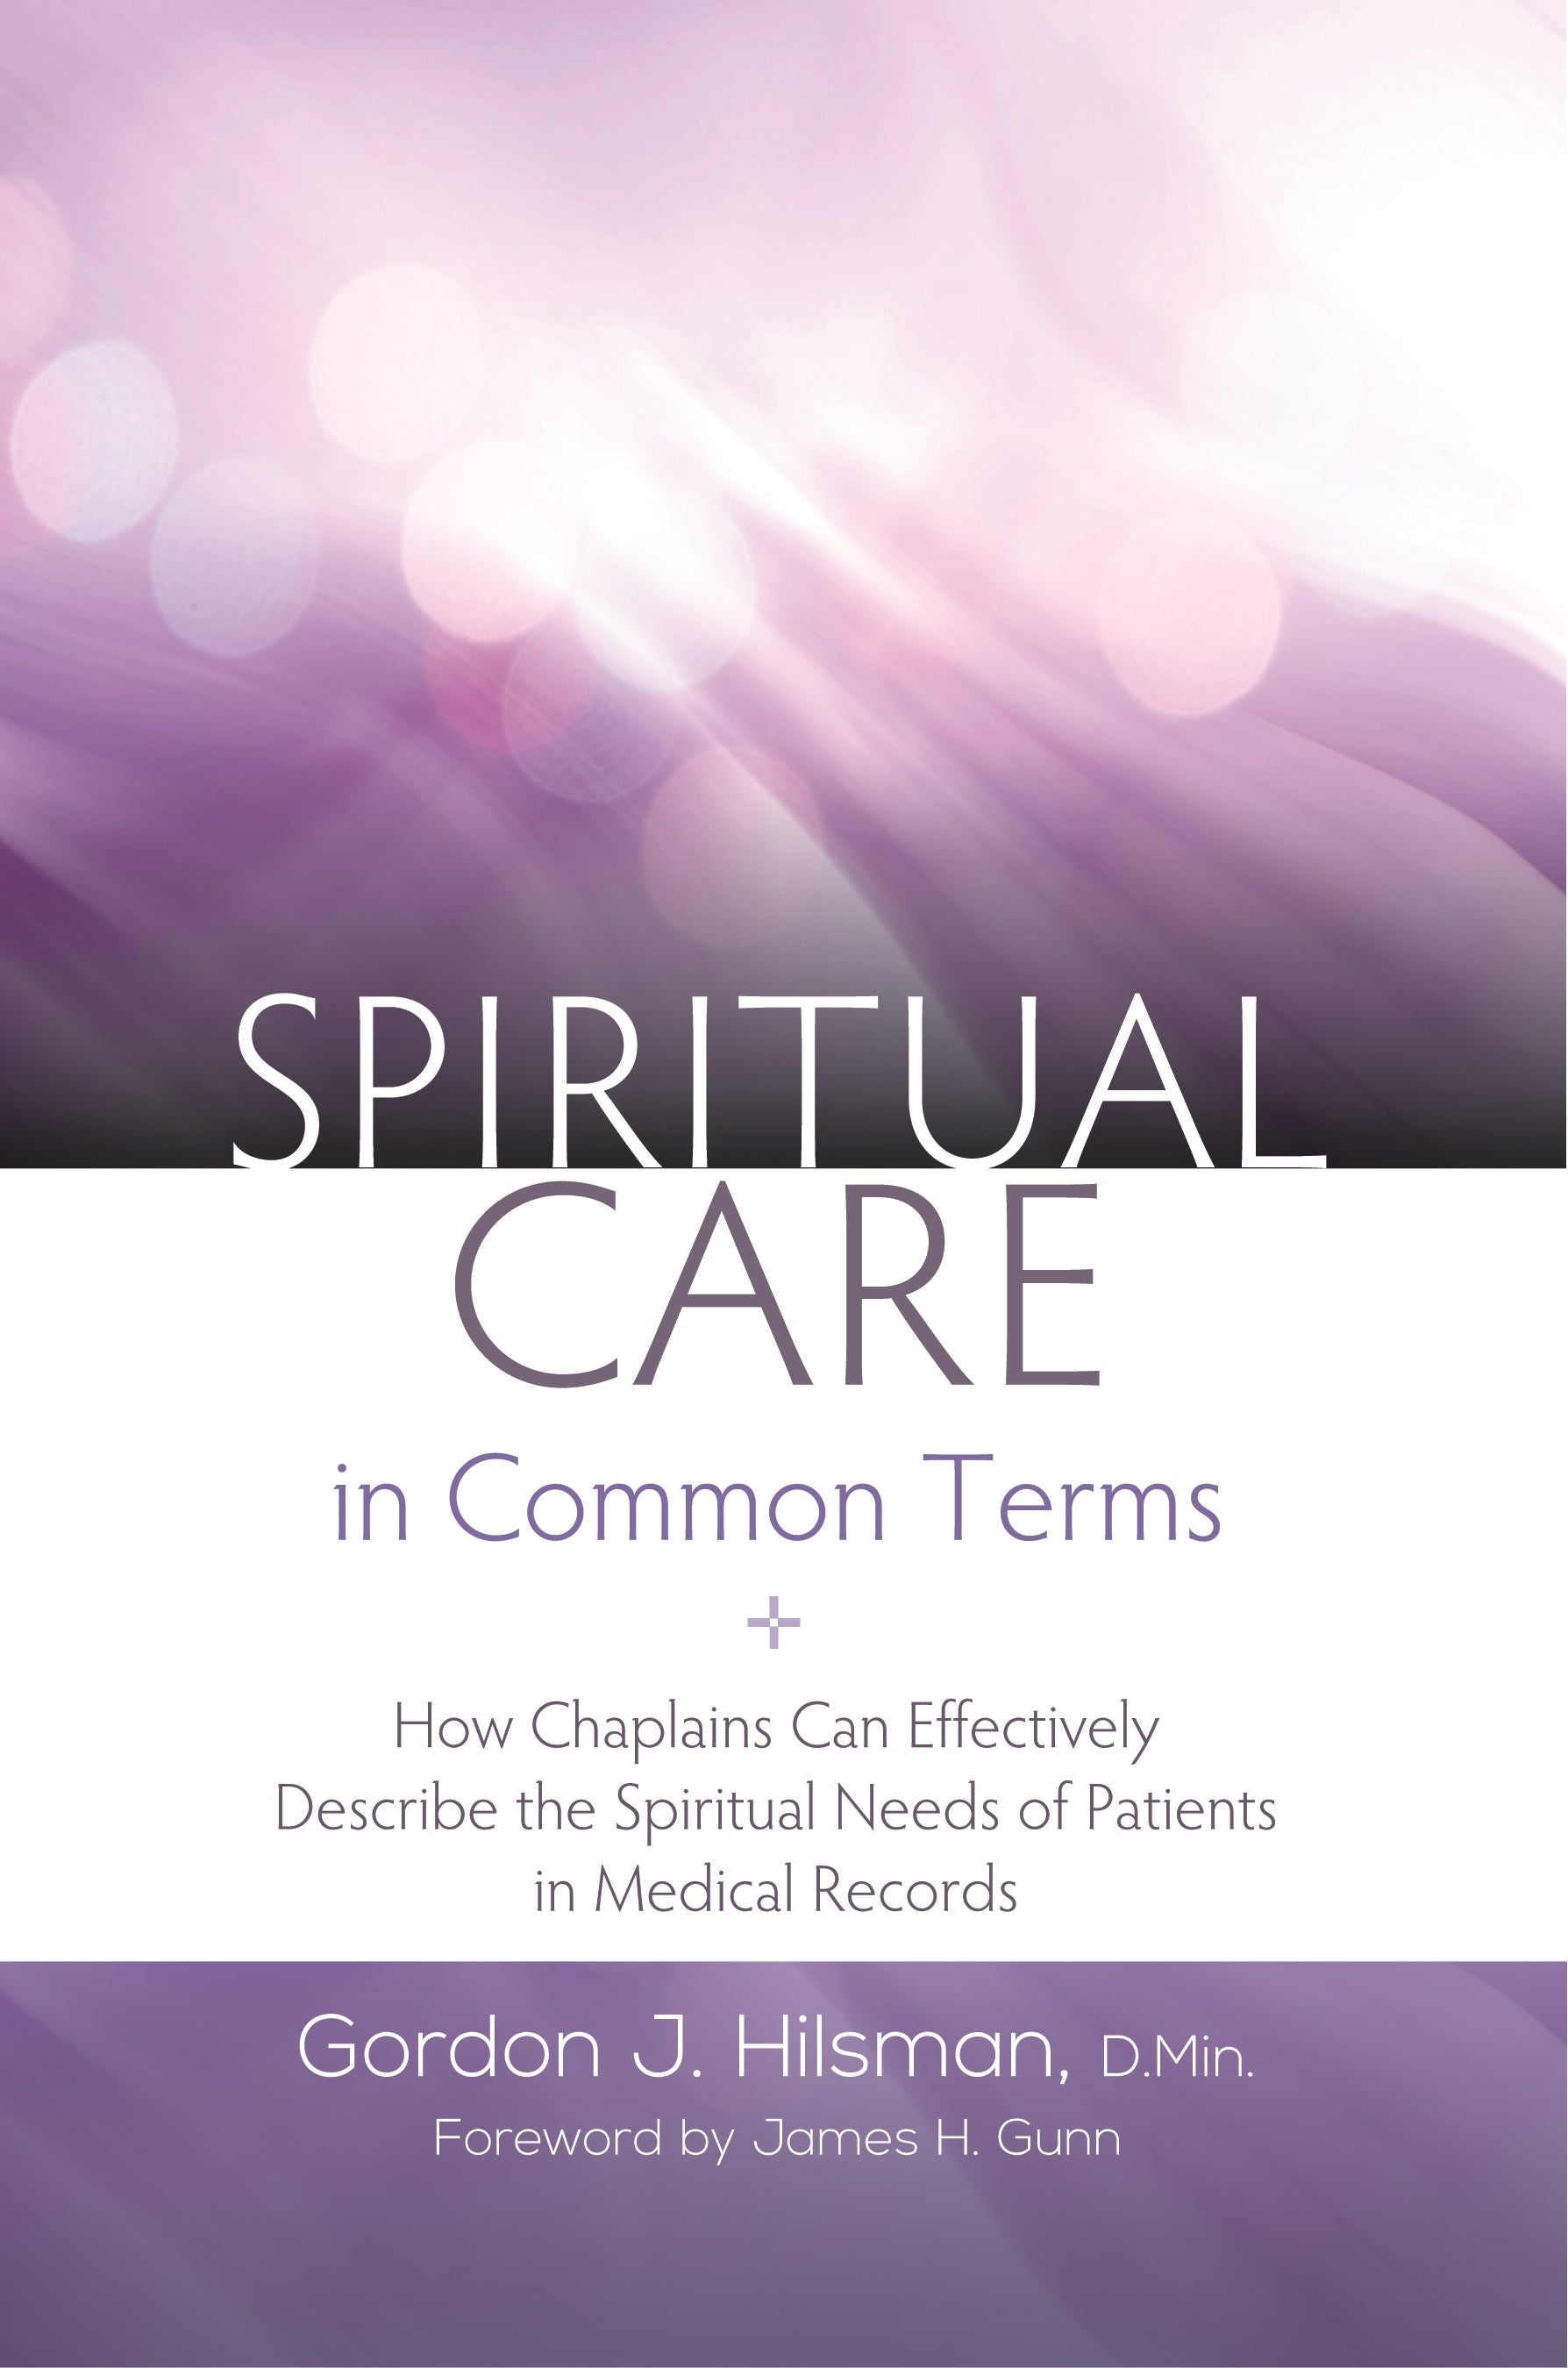 Spiritual Care in Common Terms by Gordon J. Hilsman, D.Min, James H. Gunn